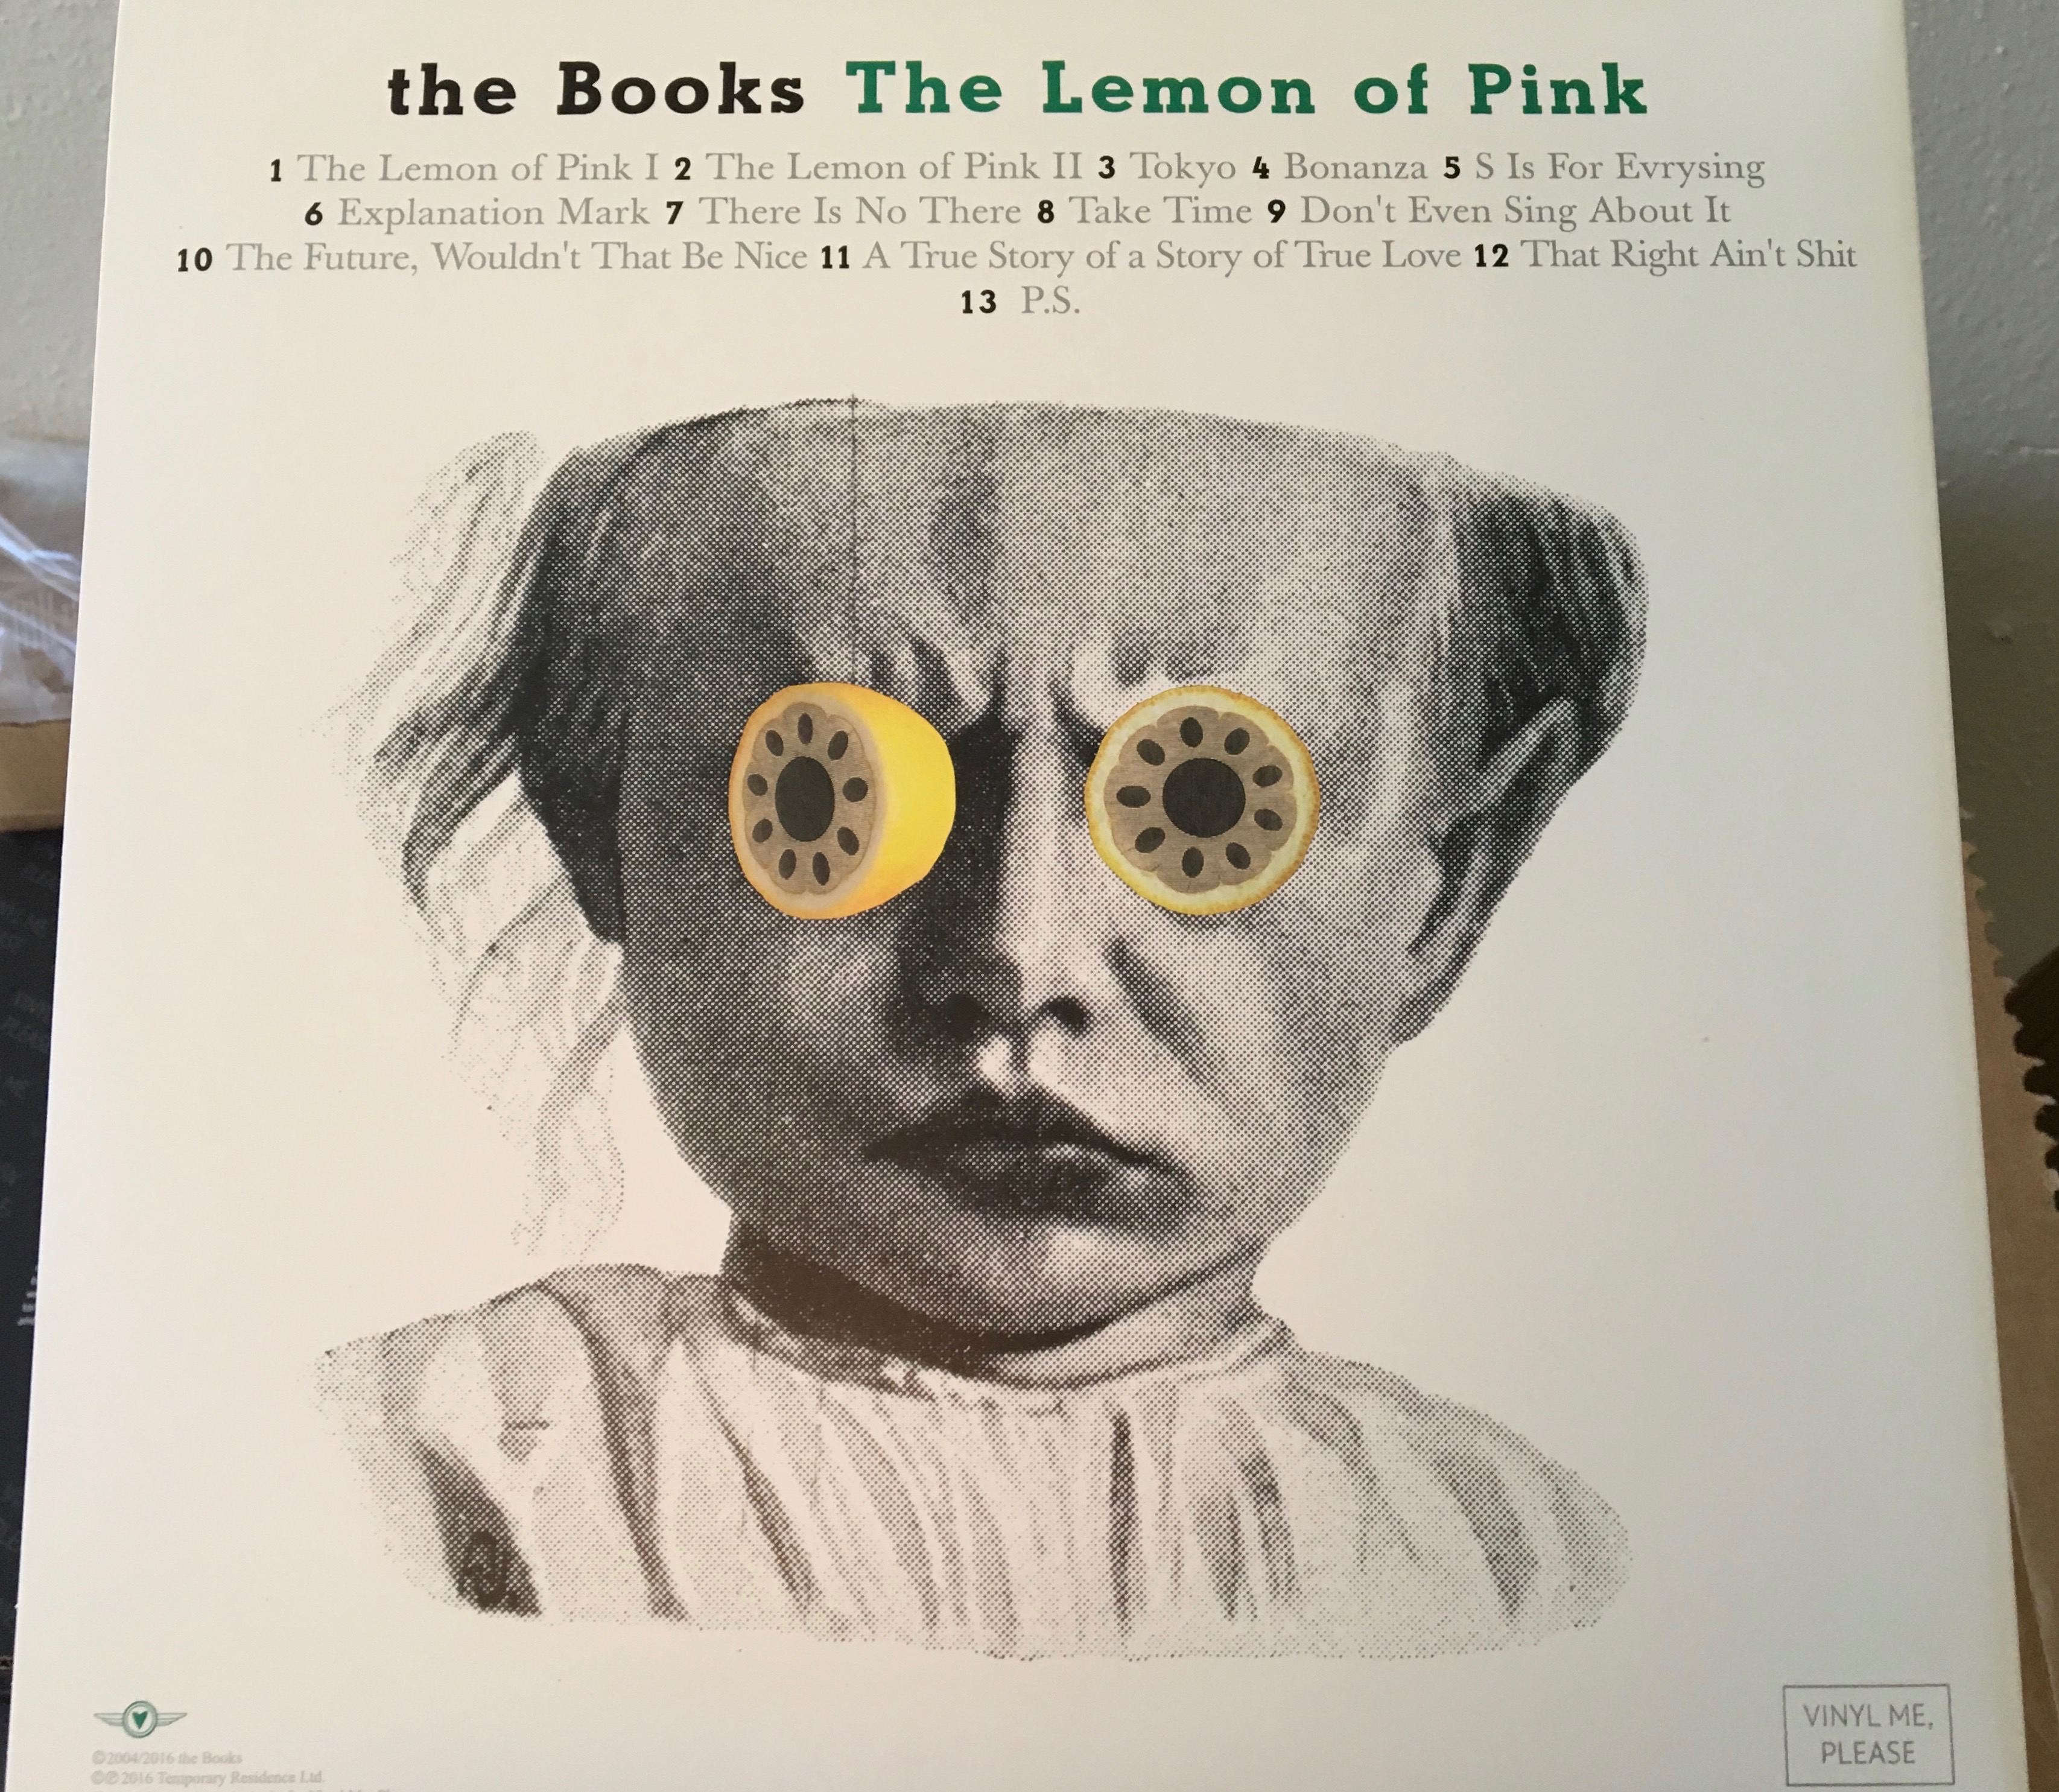 The lemon of pink